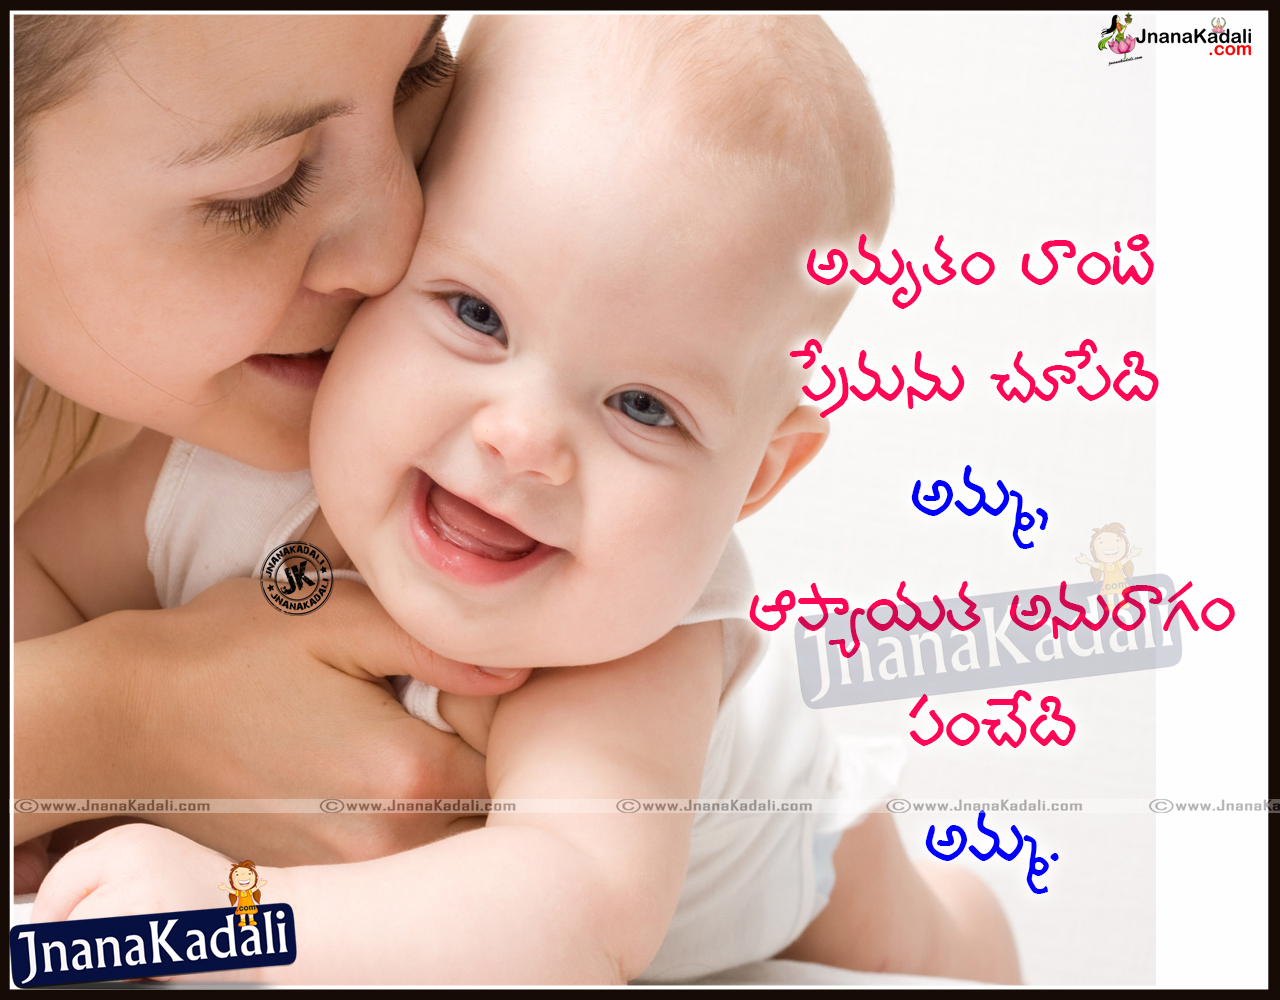 Telugu Mother Quotes -Mother Meaning in Telugu Language | JNANA ...